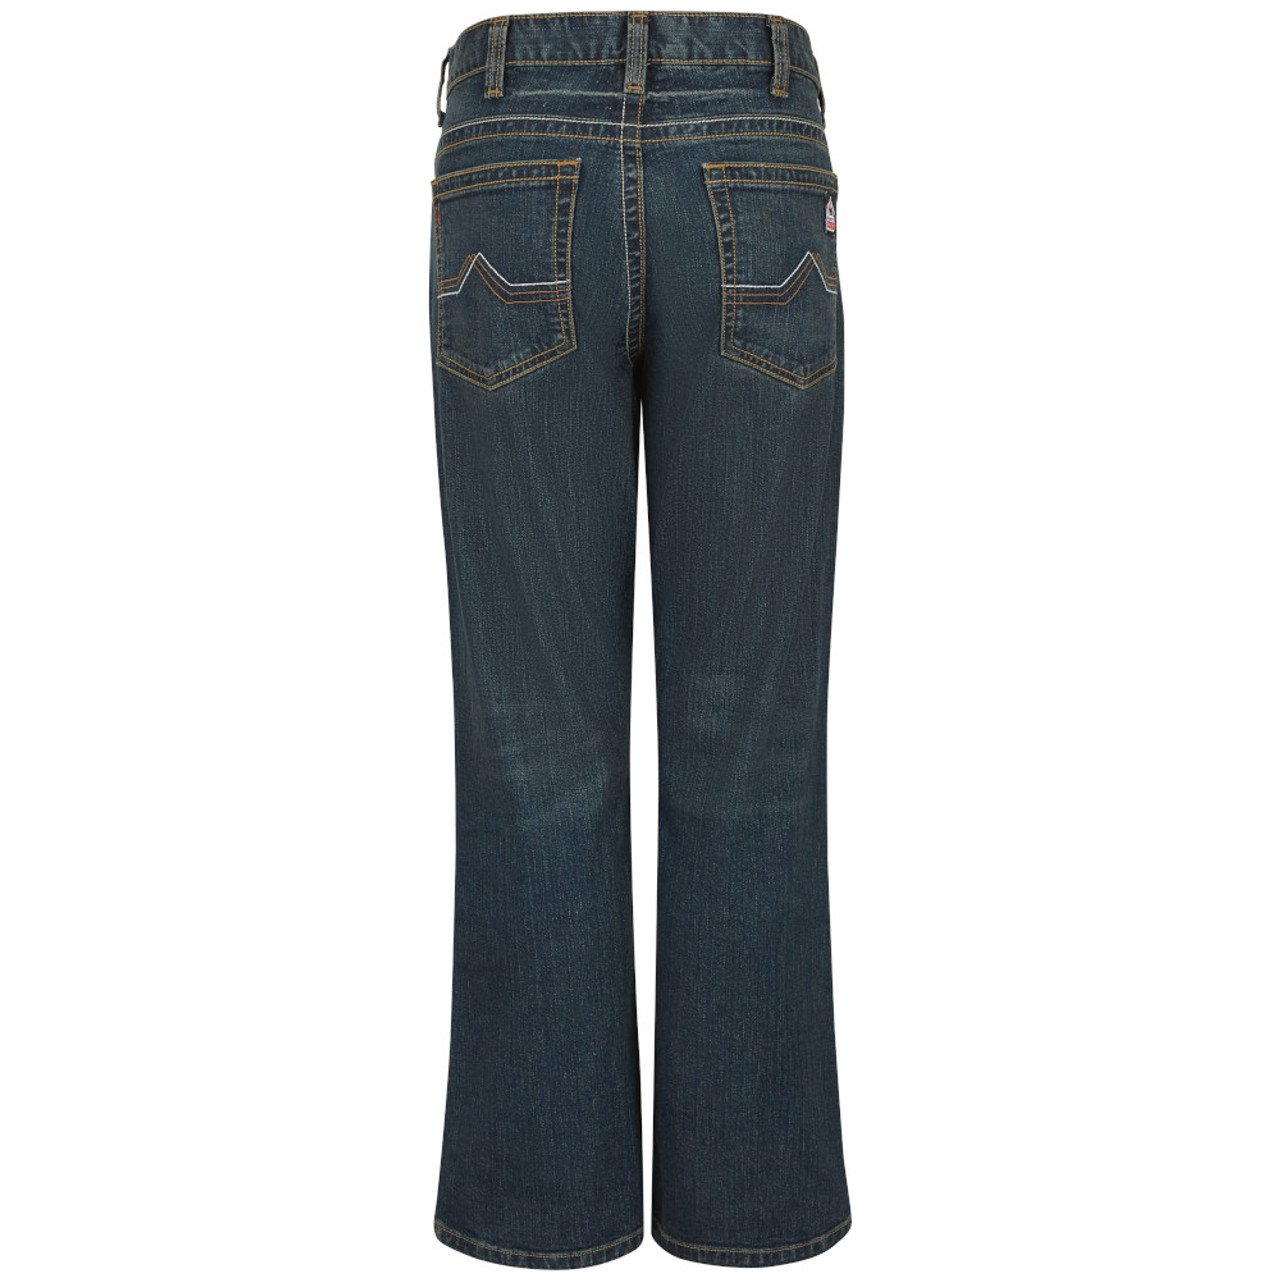 Plain Mens Bell Bottom Denim Jeans, Bootcut, Blue at Rs 799/piece